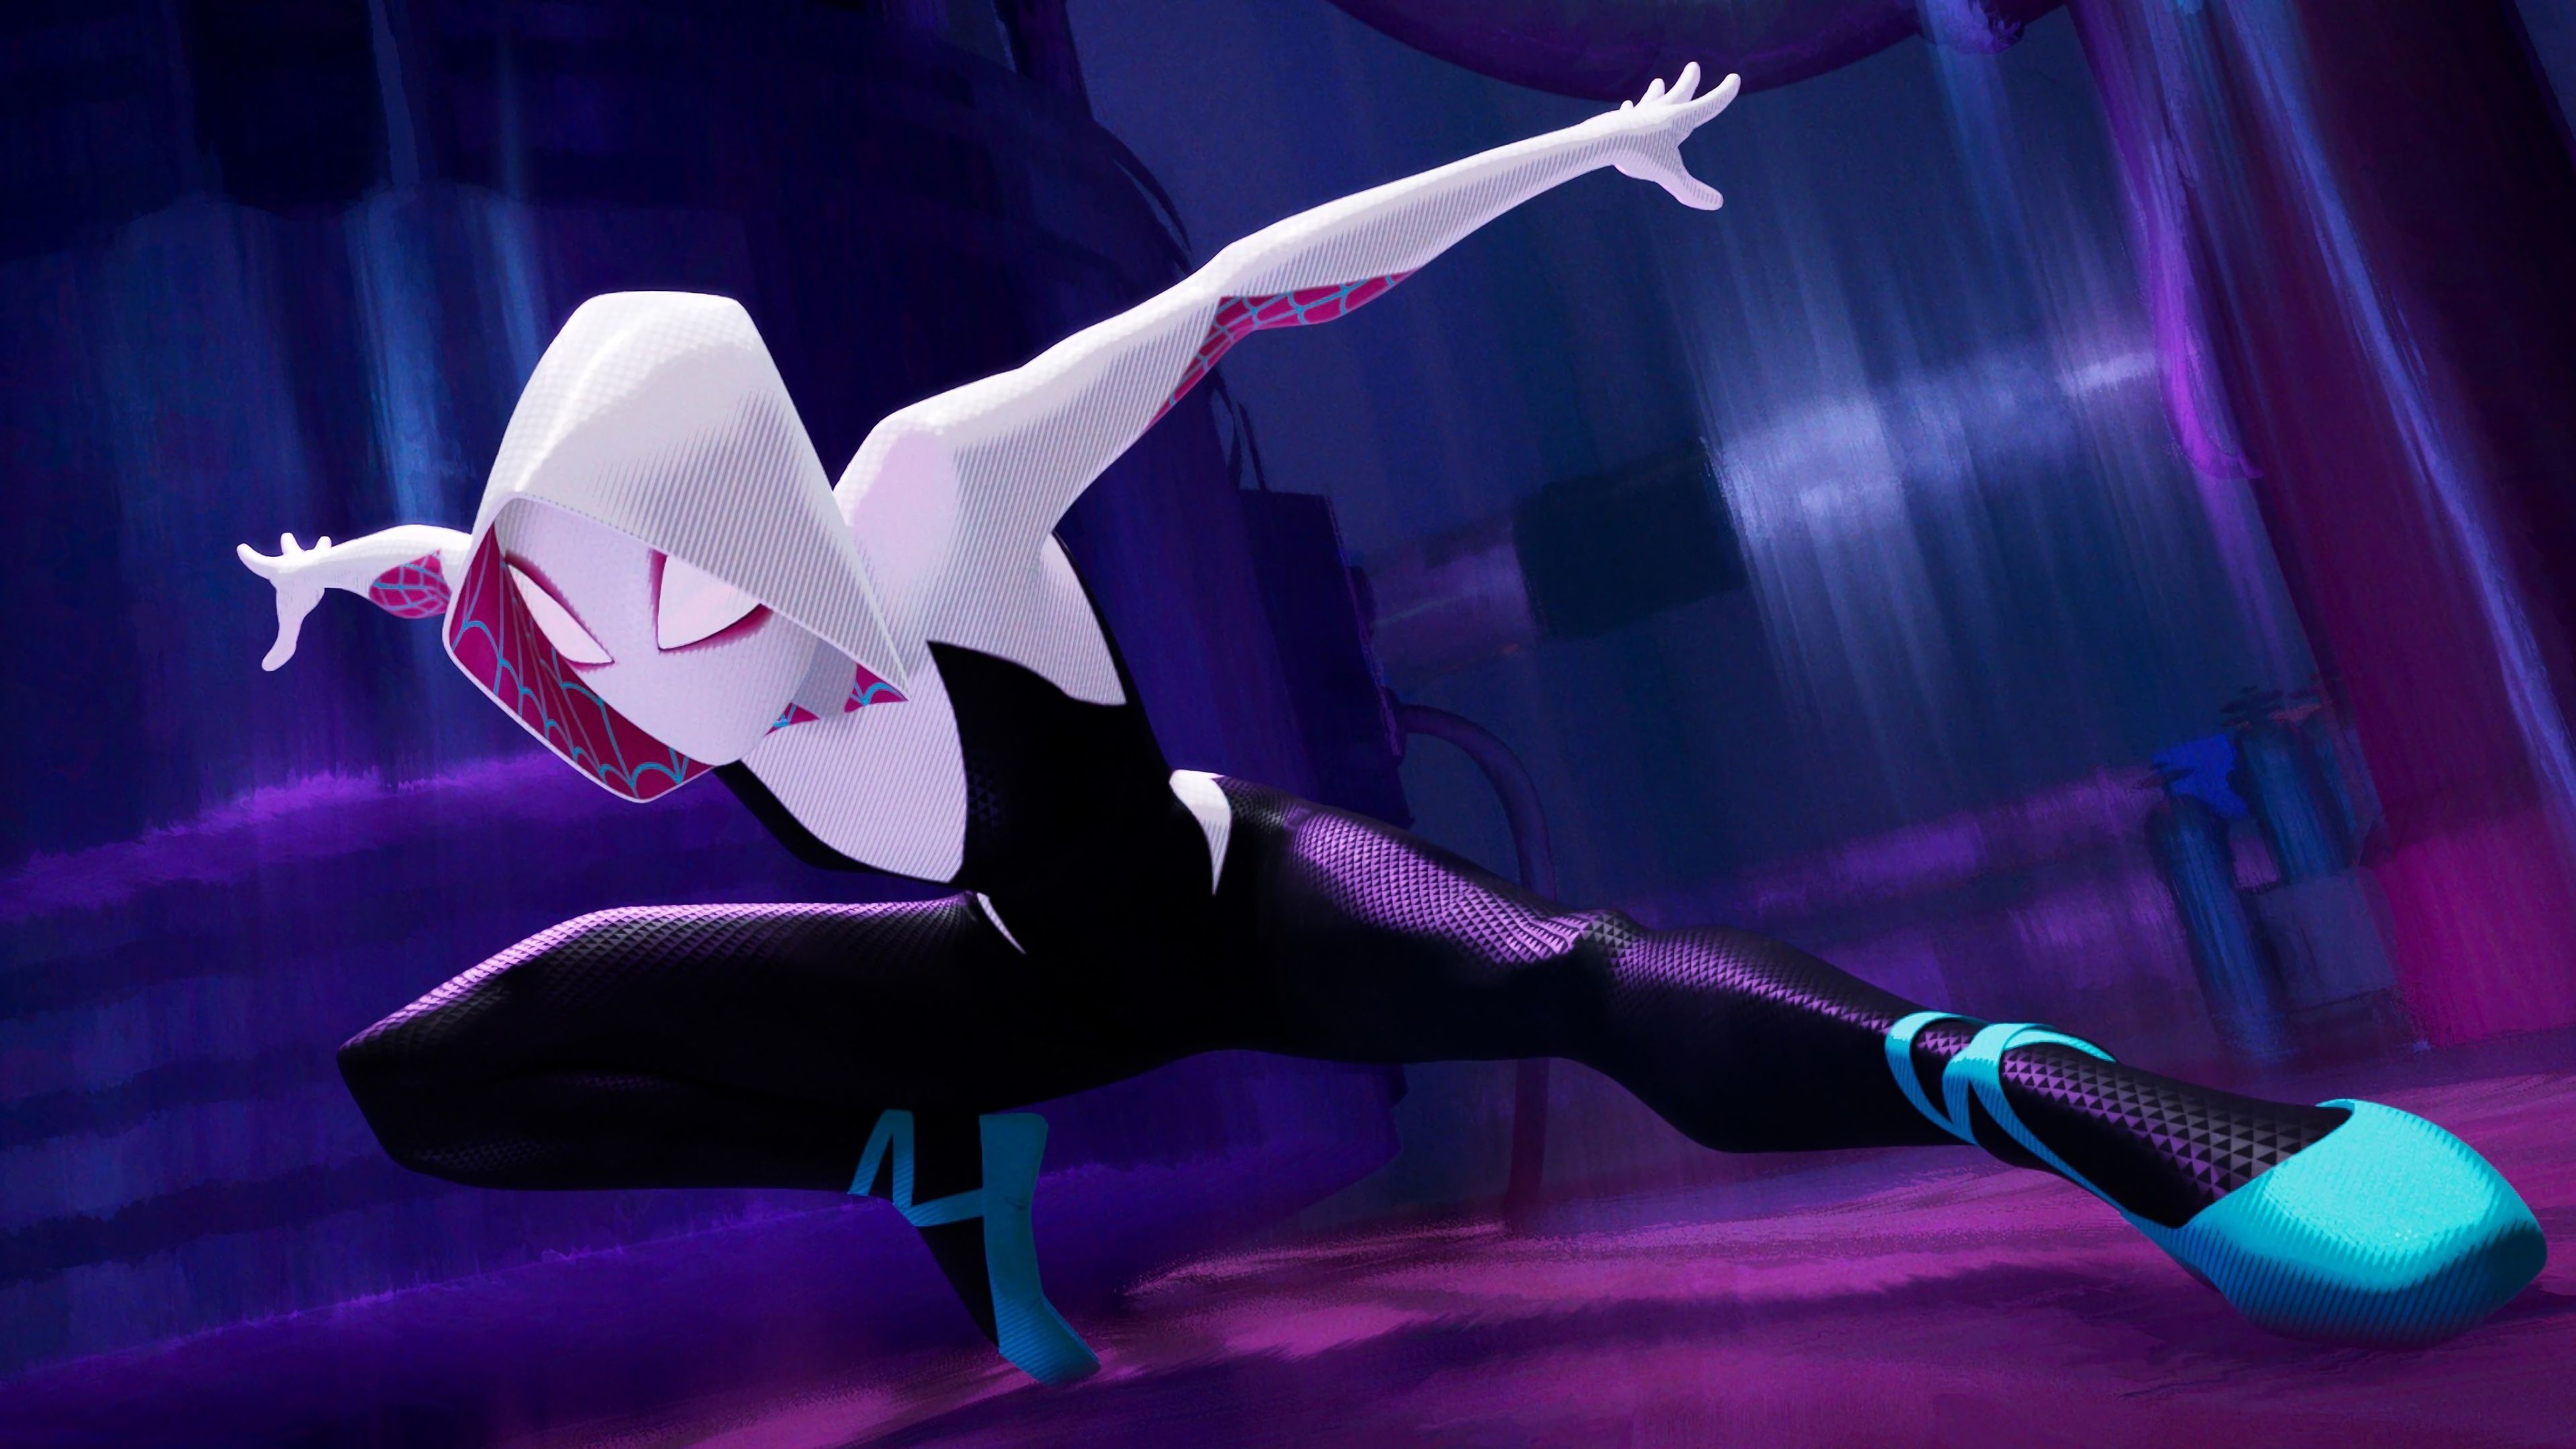 Spider Gwen Stacy, Alternate universe, Iconic character, Powerful heroine, 3840x2160 4K Desktop